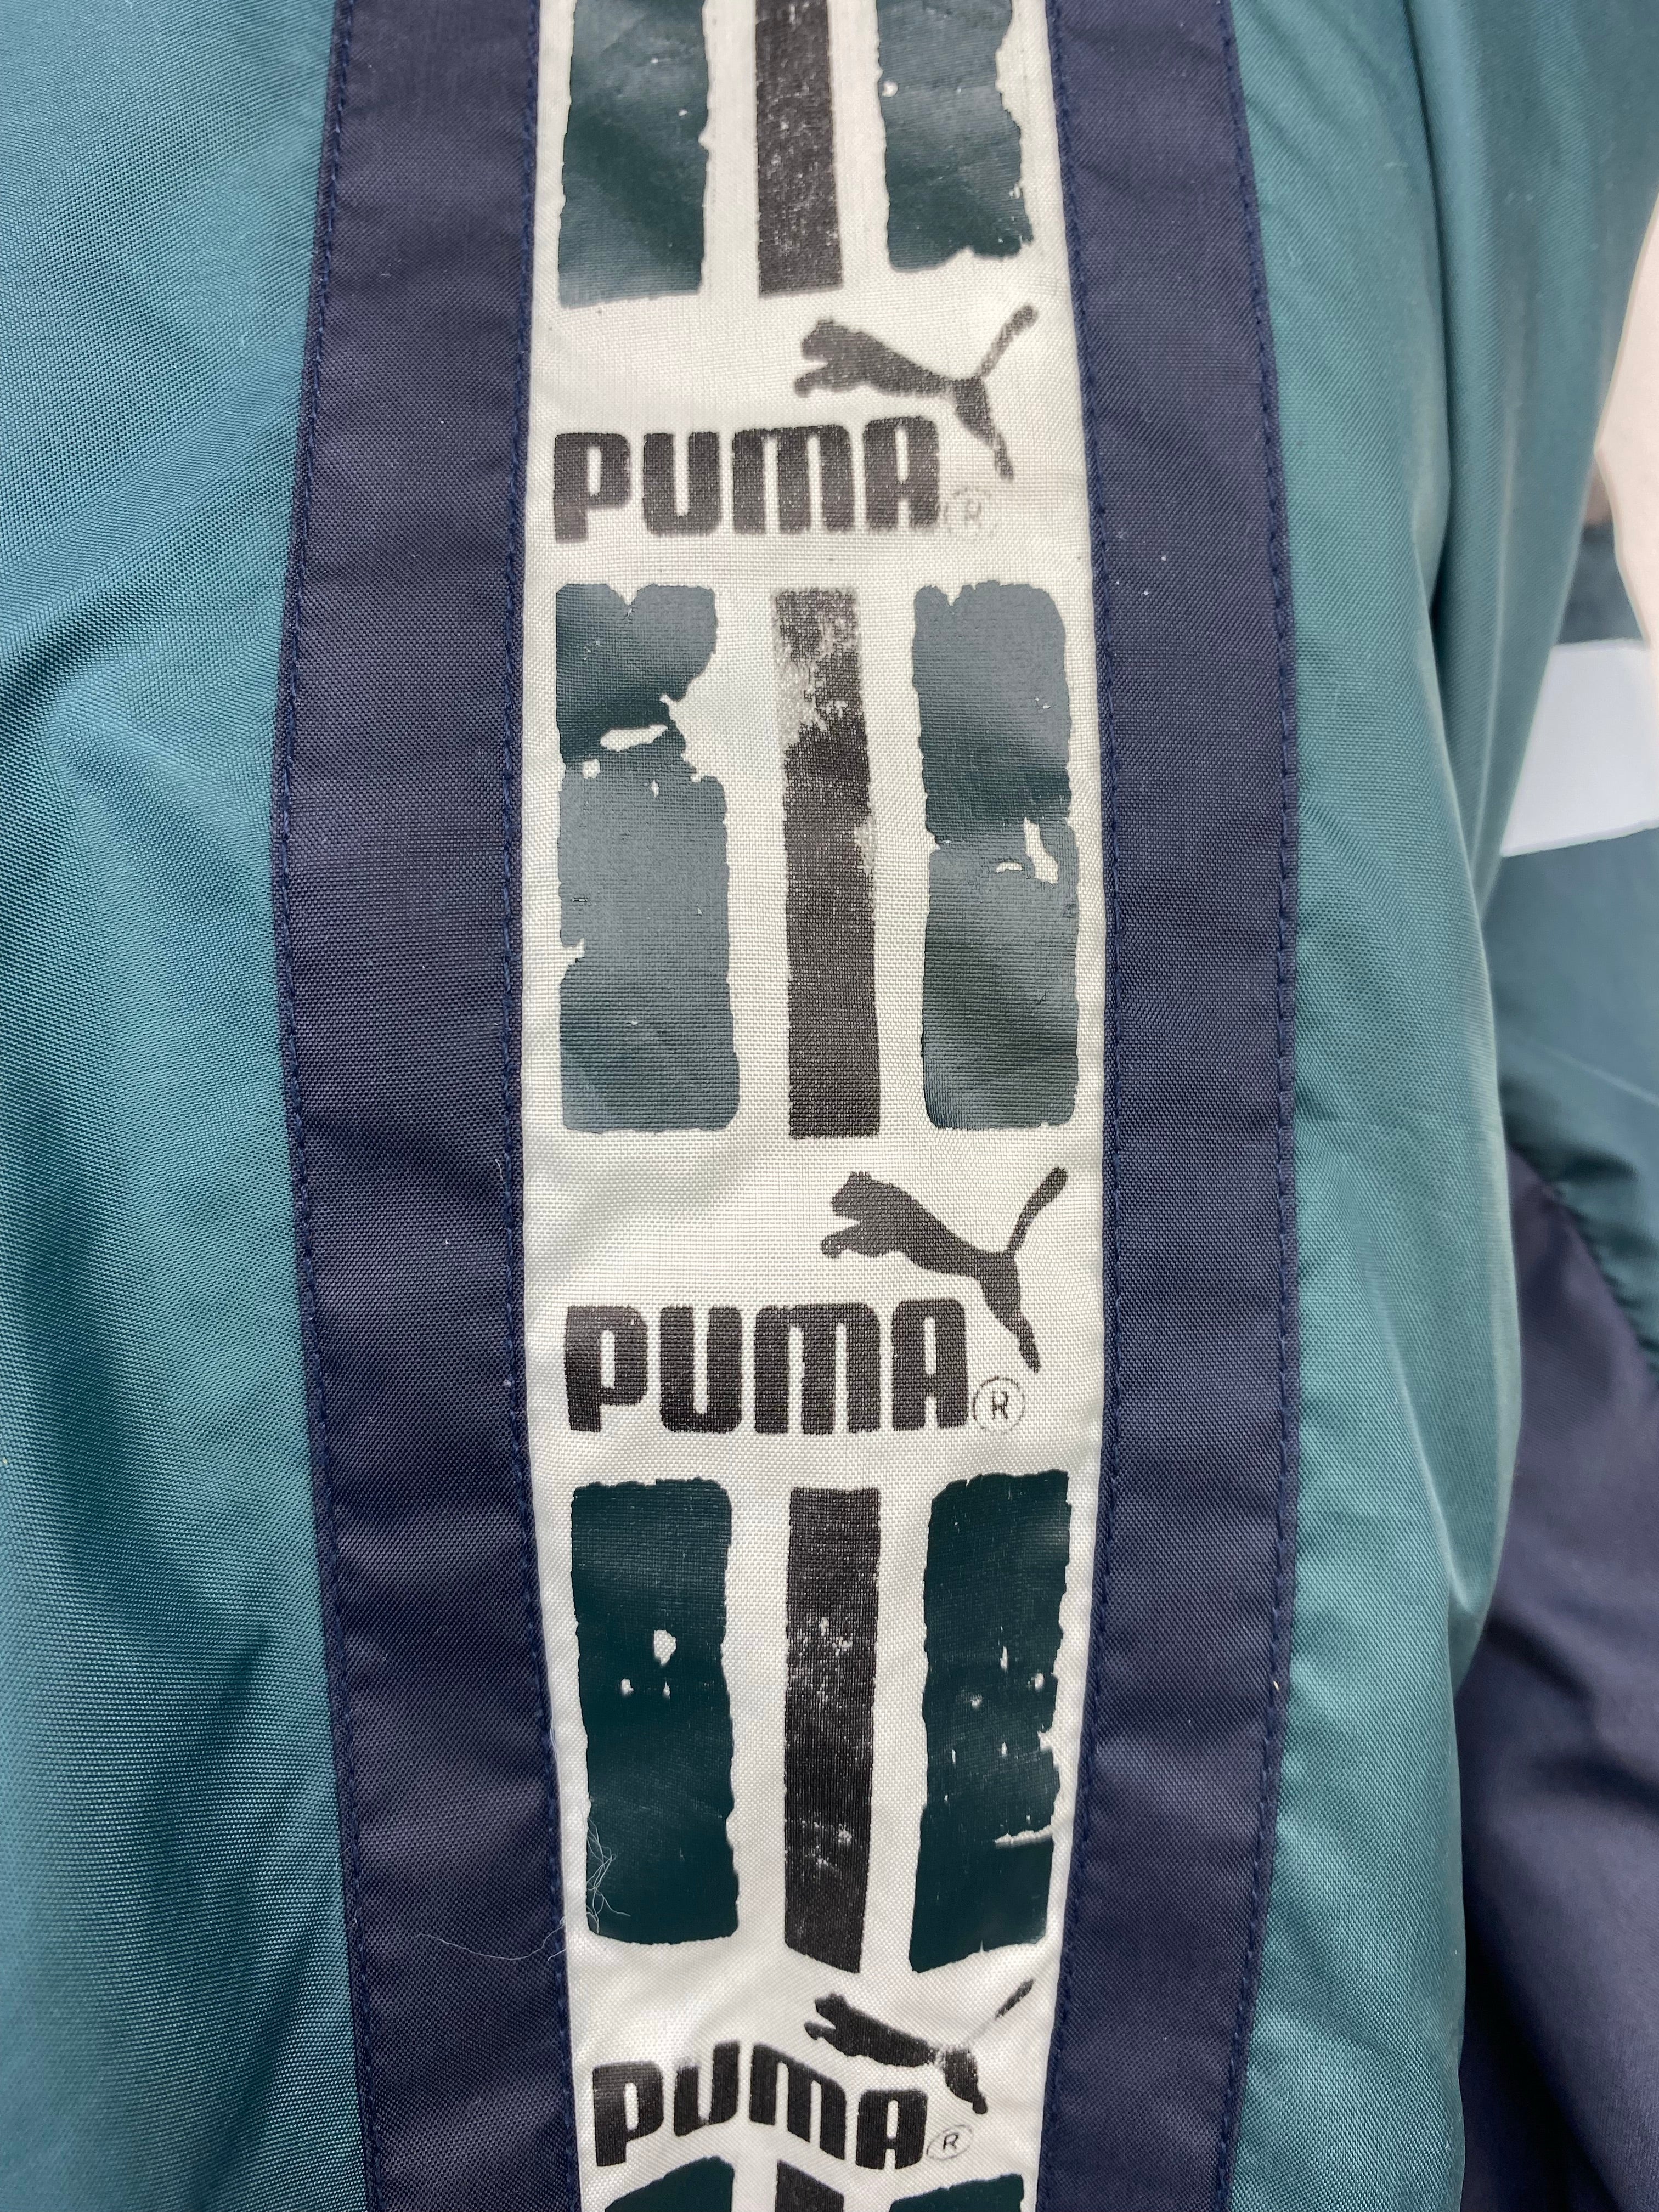 1995/97 Parma Training Jacket (XXL) 6.5/10